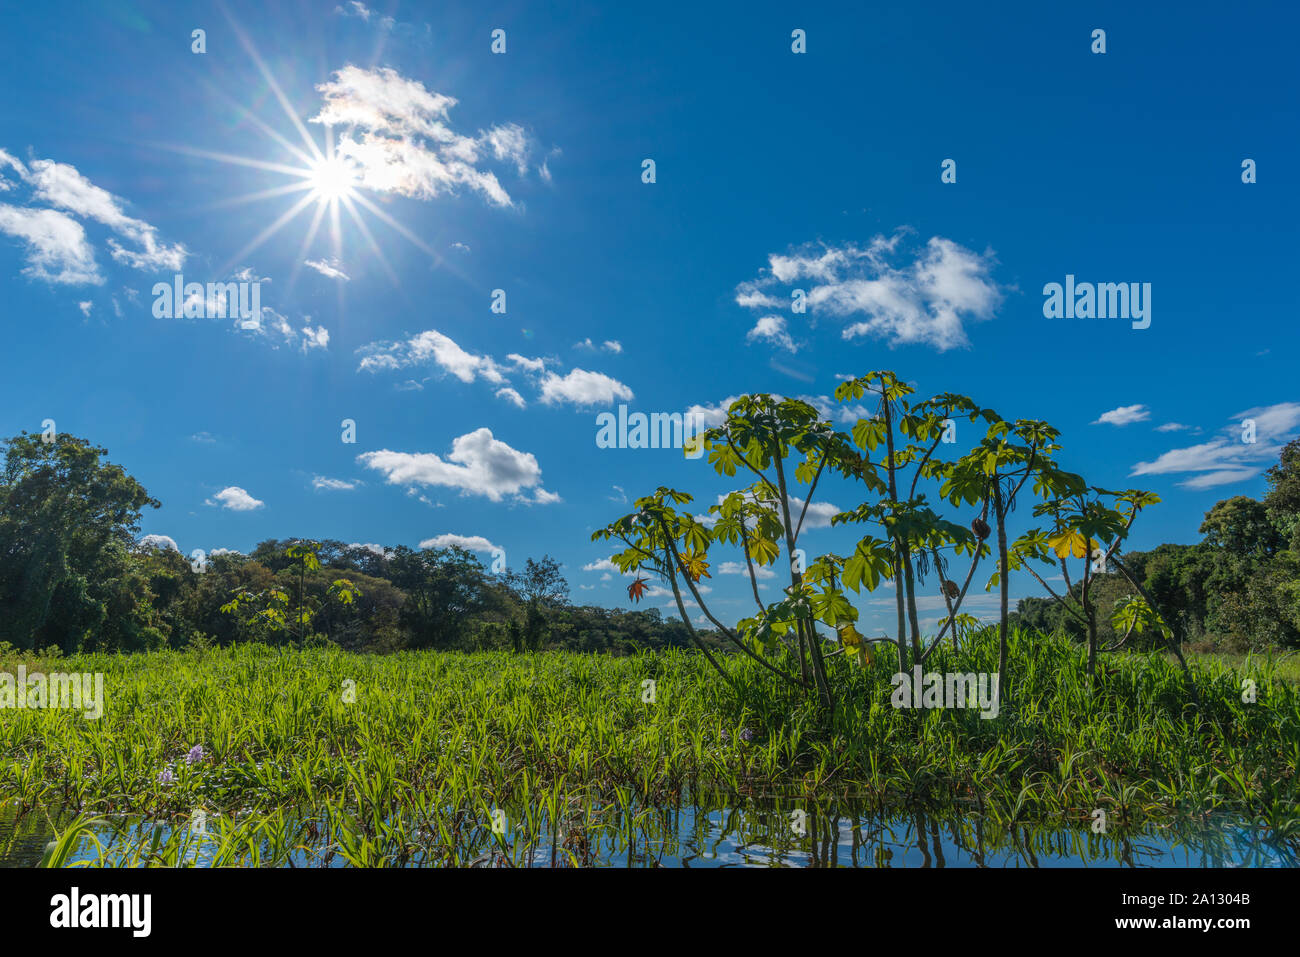 Amazon rainforest brazil plants hi-res stock photography and images - Alamy